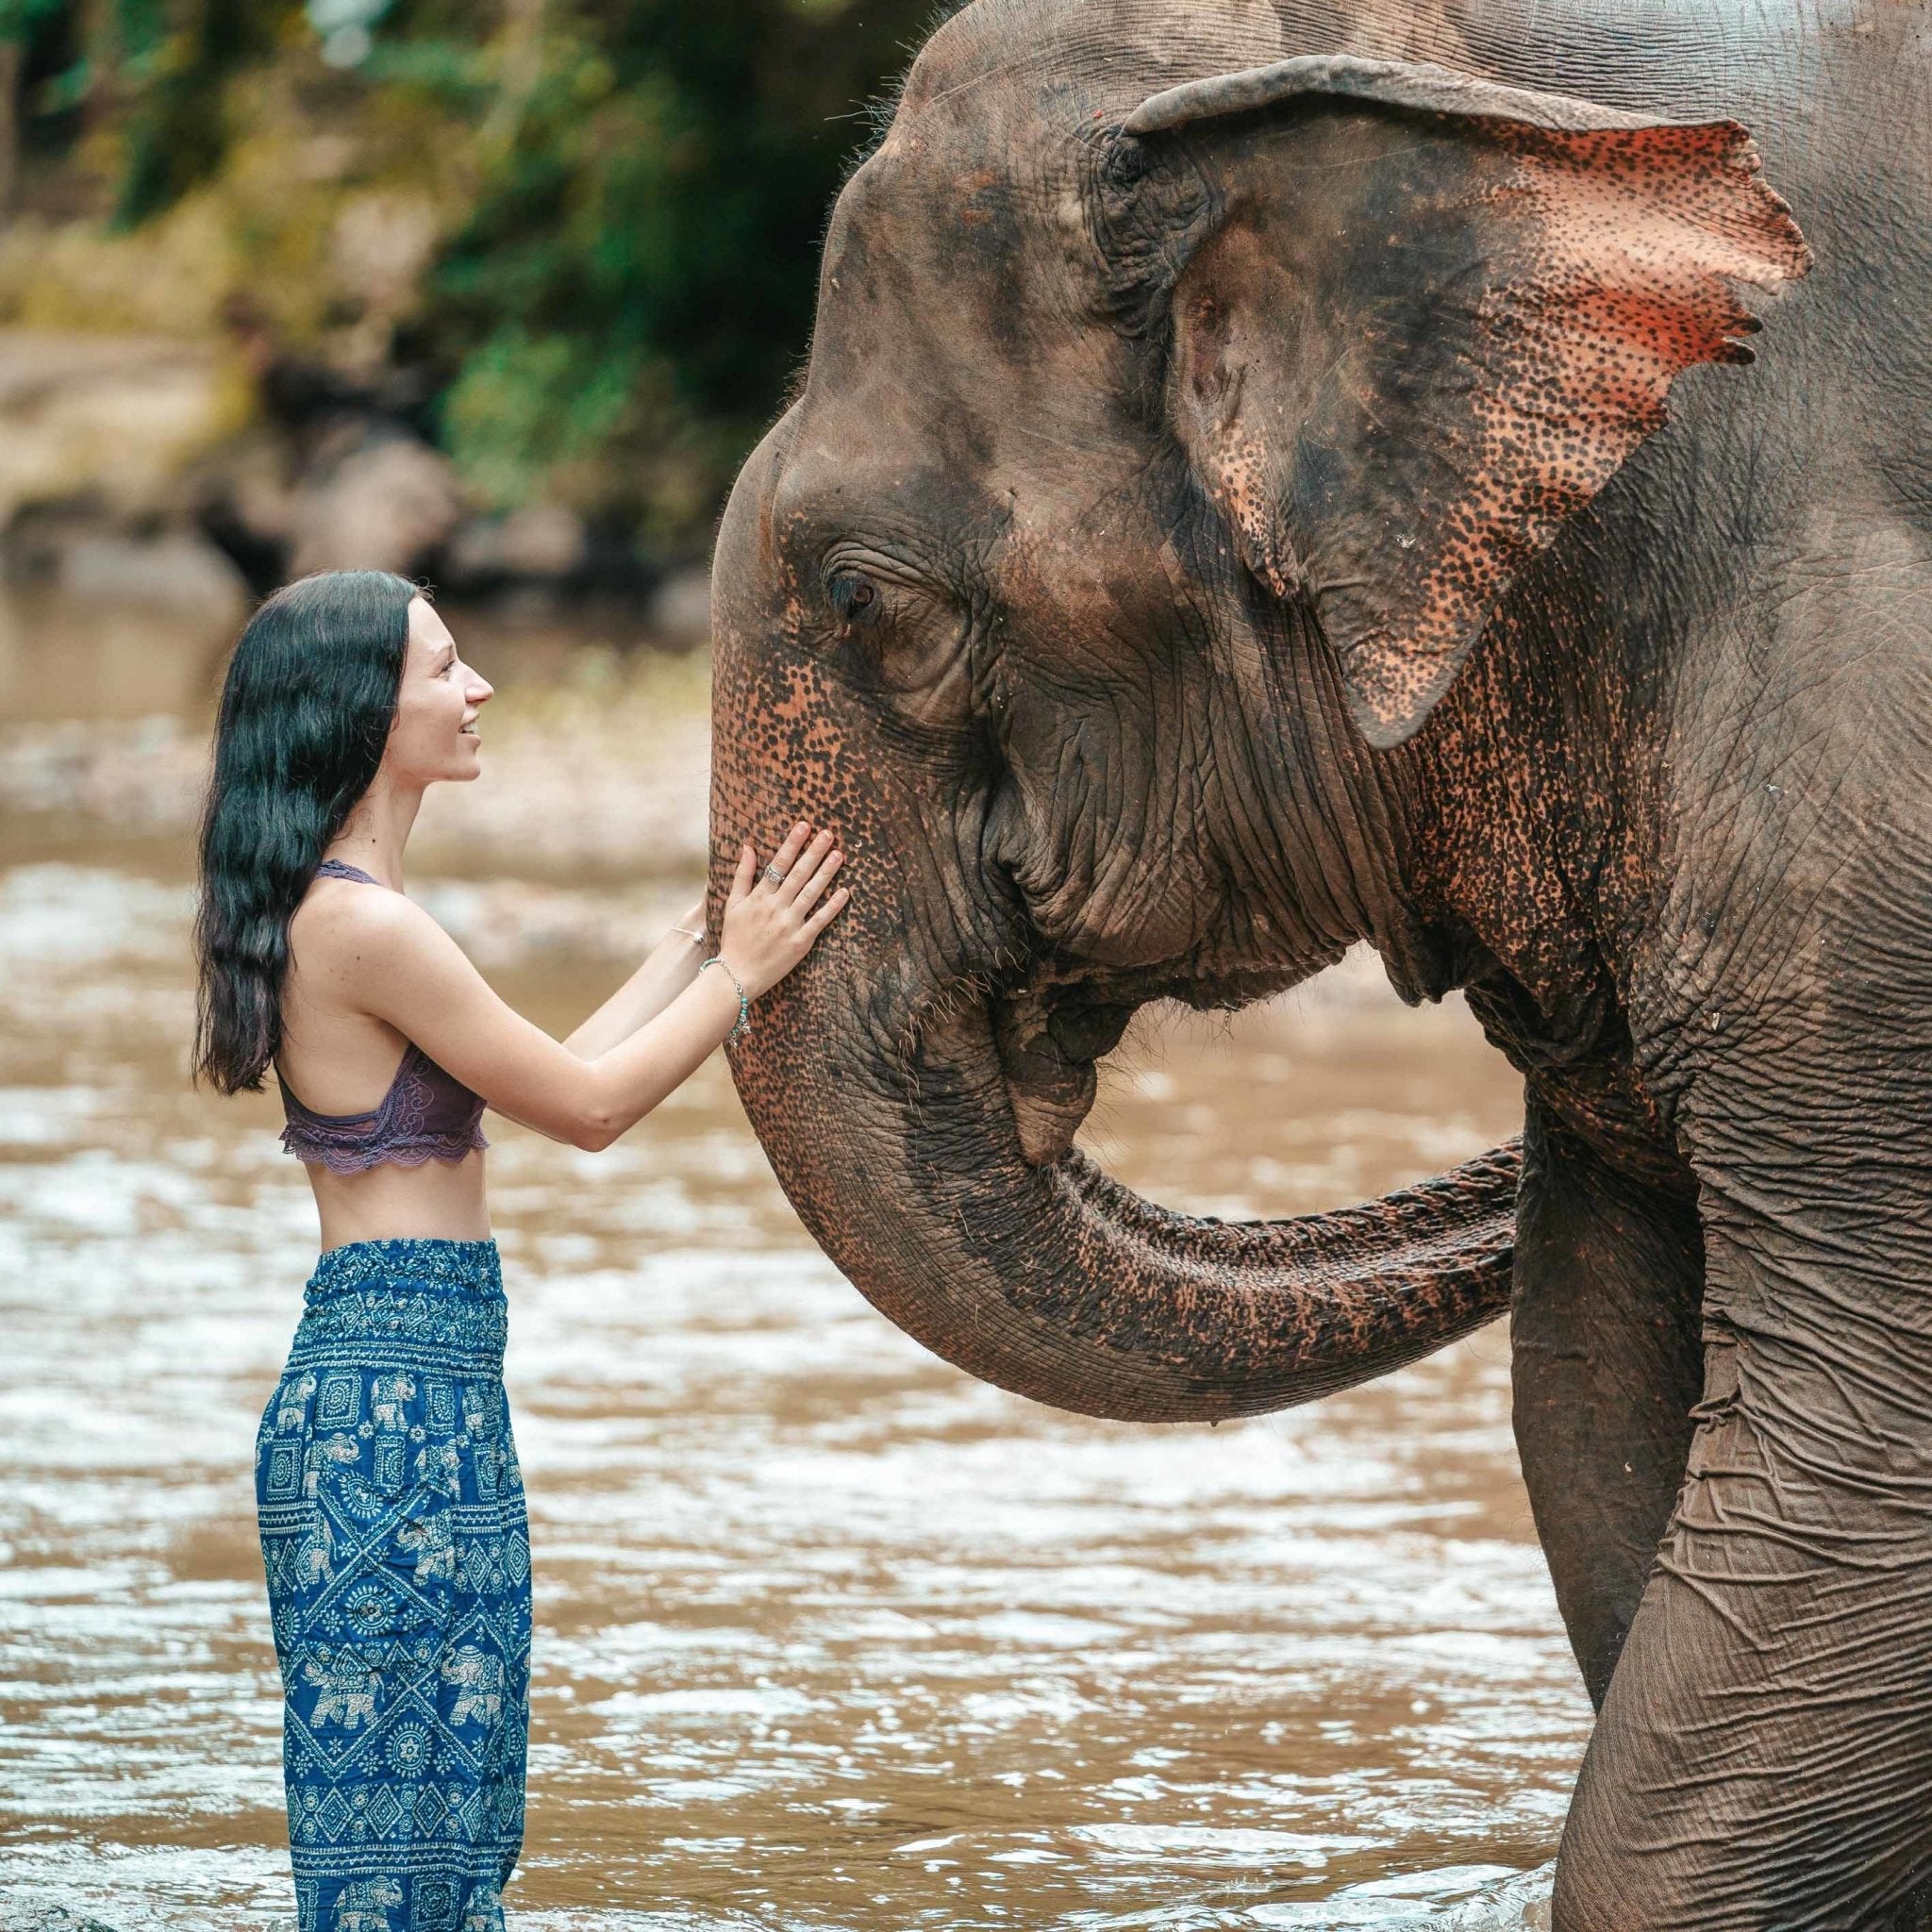 AGRA PANTS - Elastic Waist Elepanta Elastic Waist Pants - Buy Today Elephant Pants Jewelry And Bohemian Clothes Handmade In Thailand Help To Save The Elephants FairTrade And Vegan